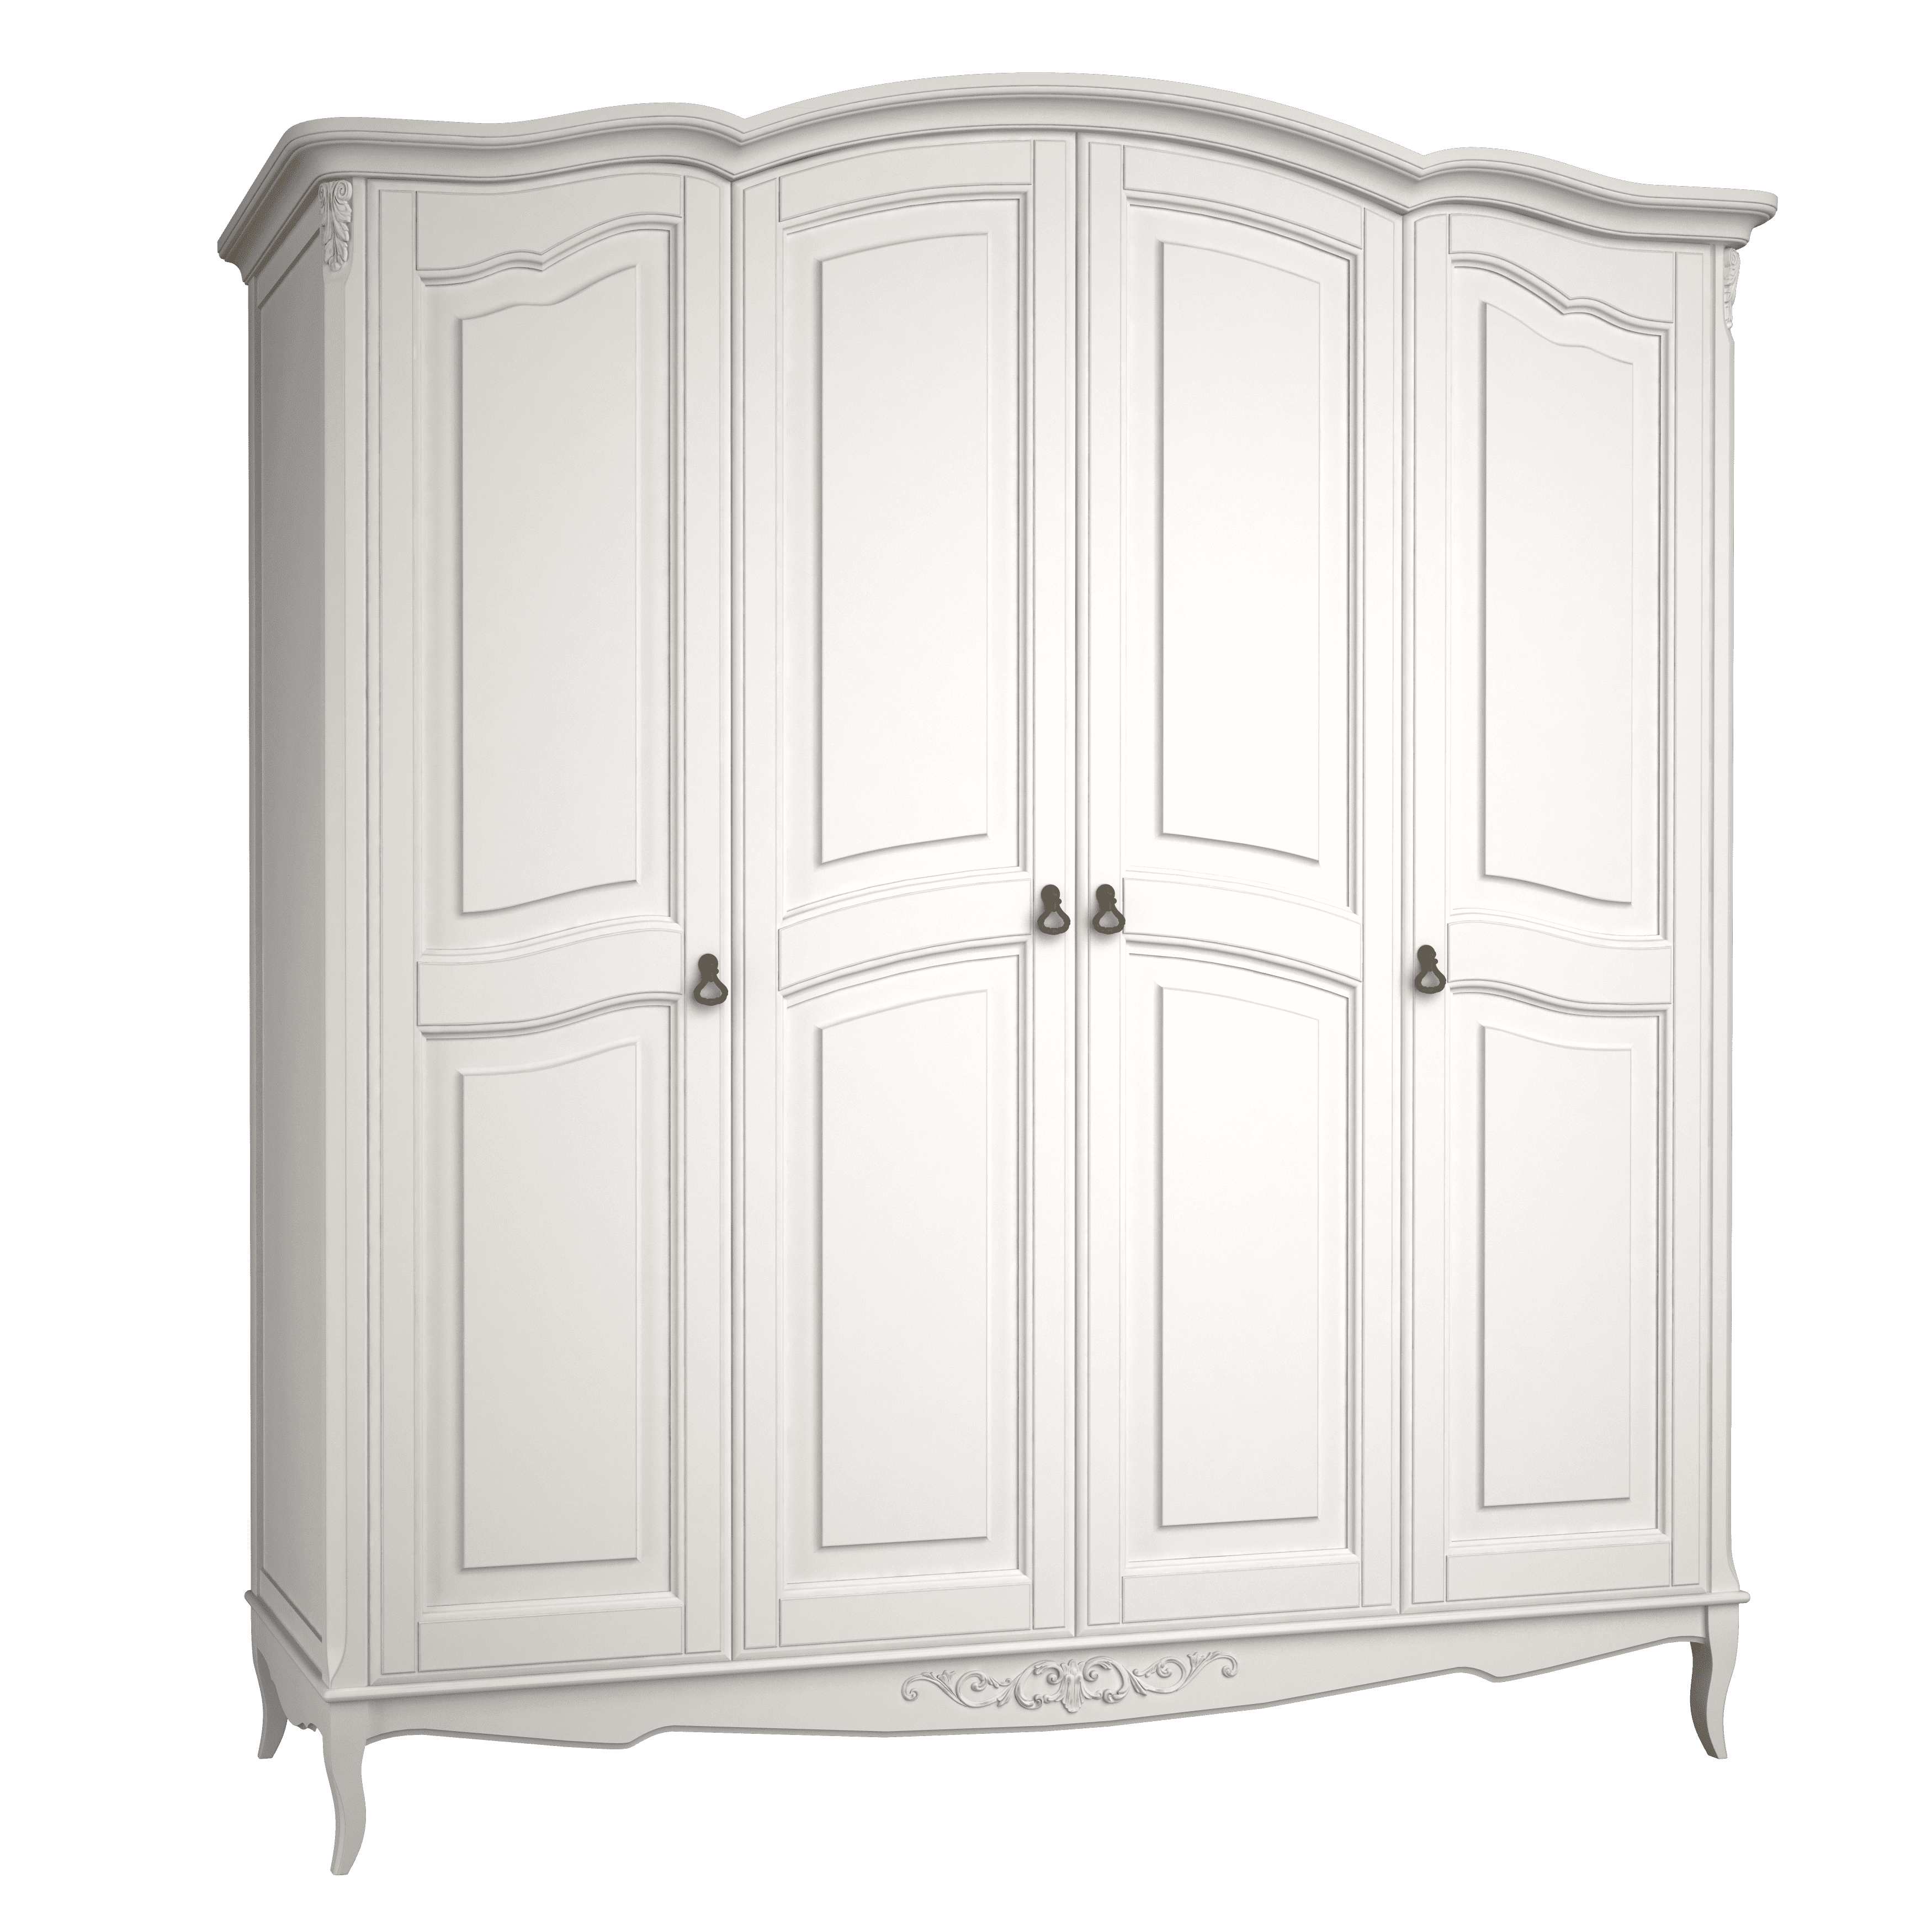 Шкаф платяной Aletan Provence, 4-х дверный, цвет: слоновая кость, размер 209х66х226 см (B804)B804